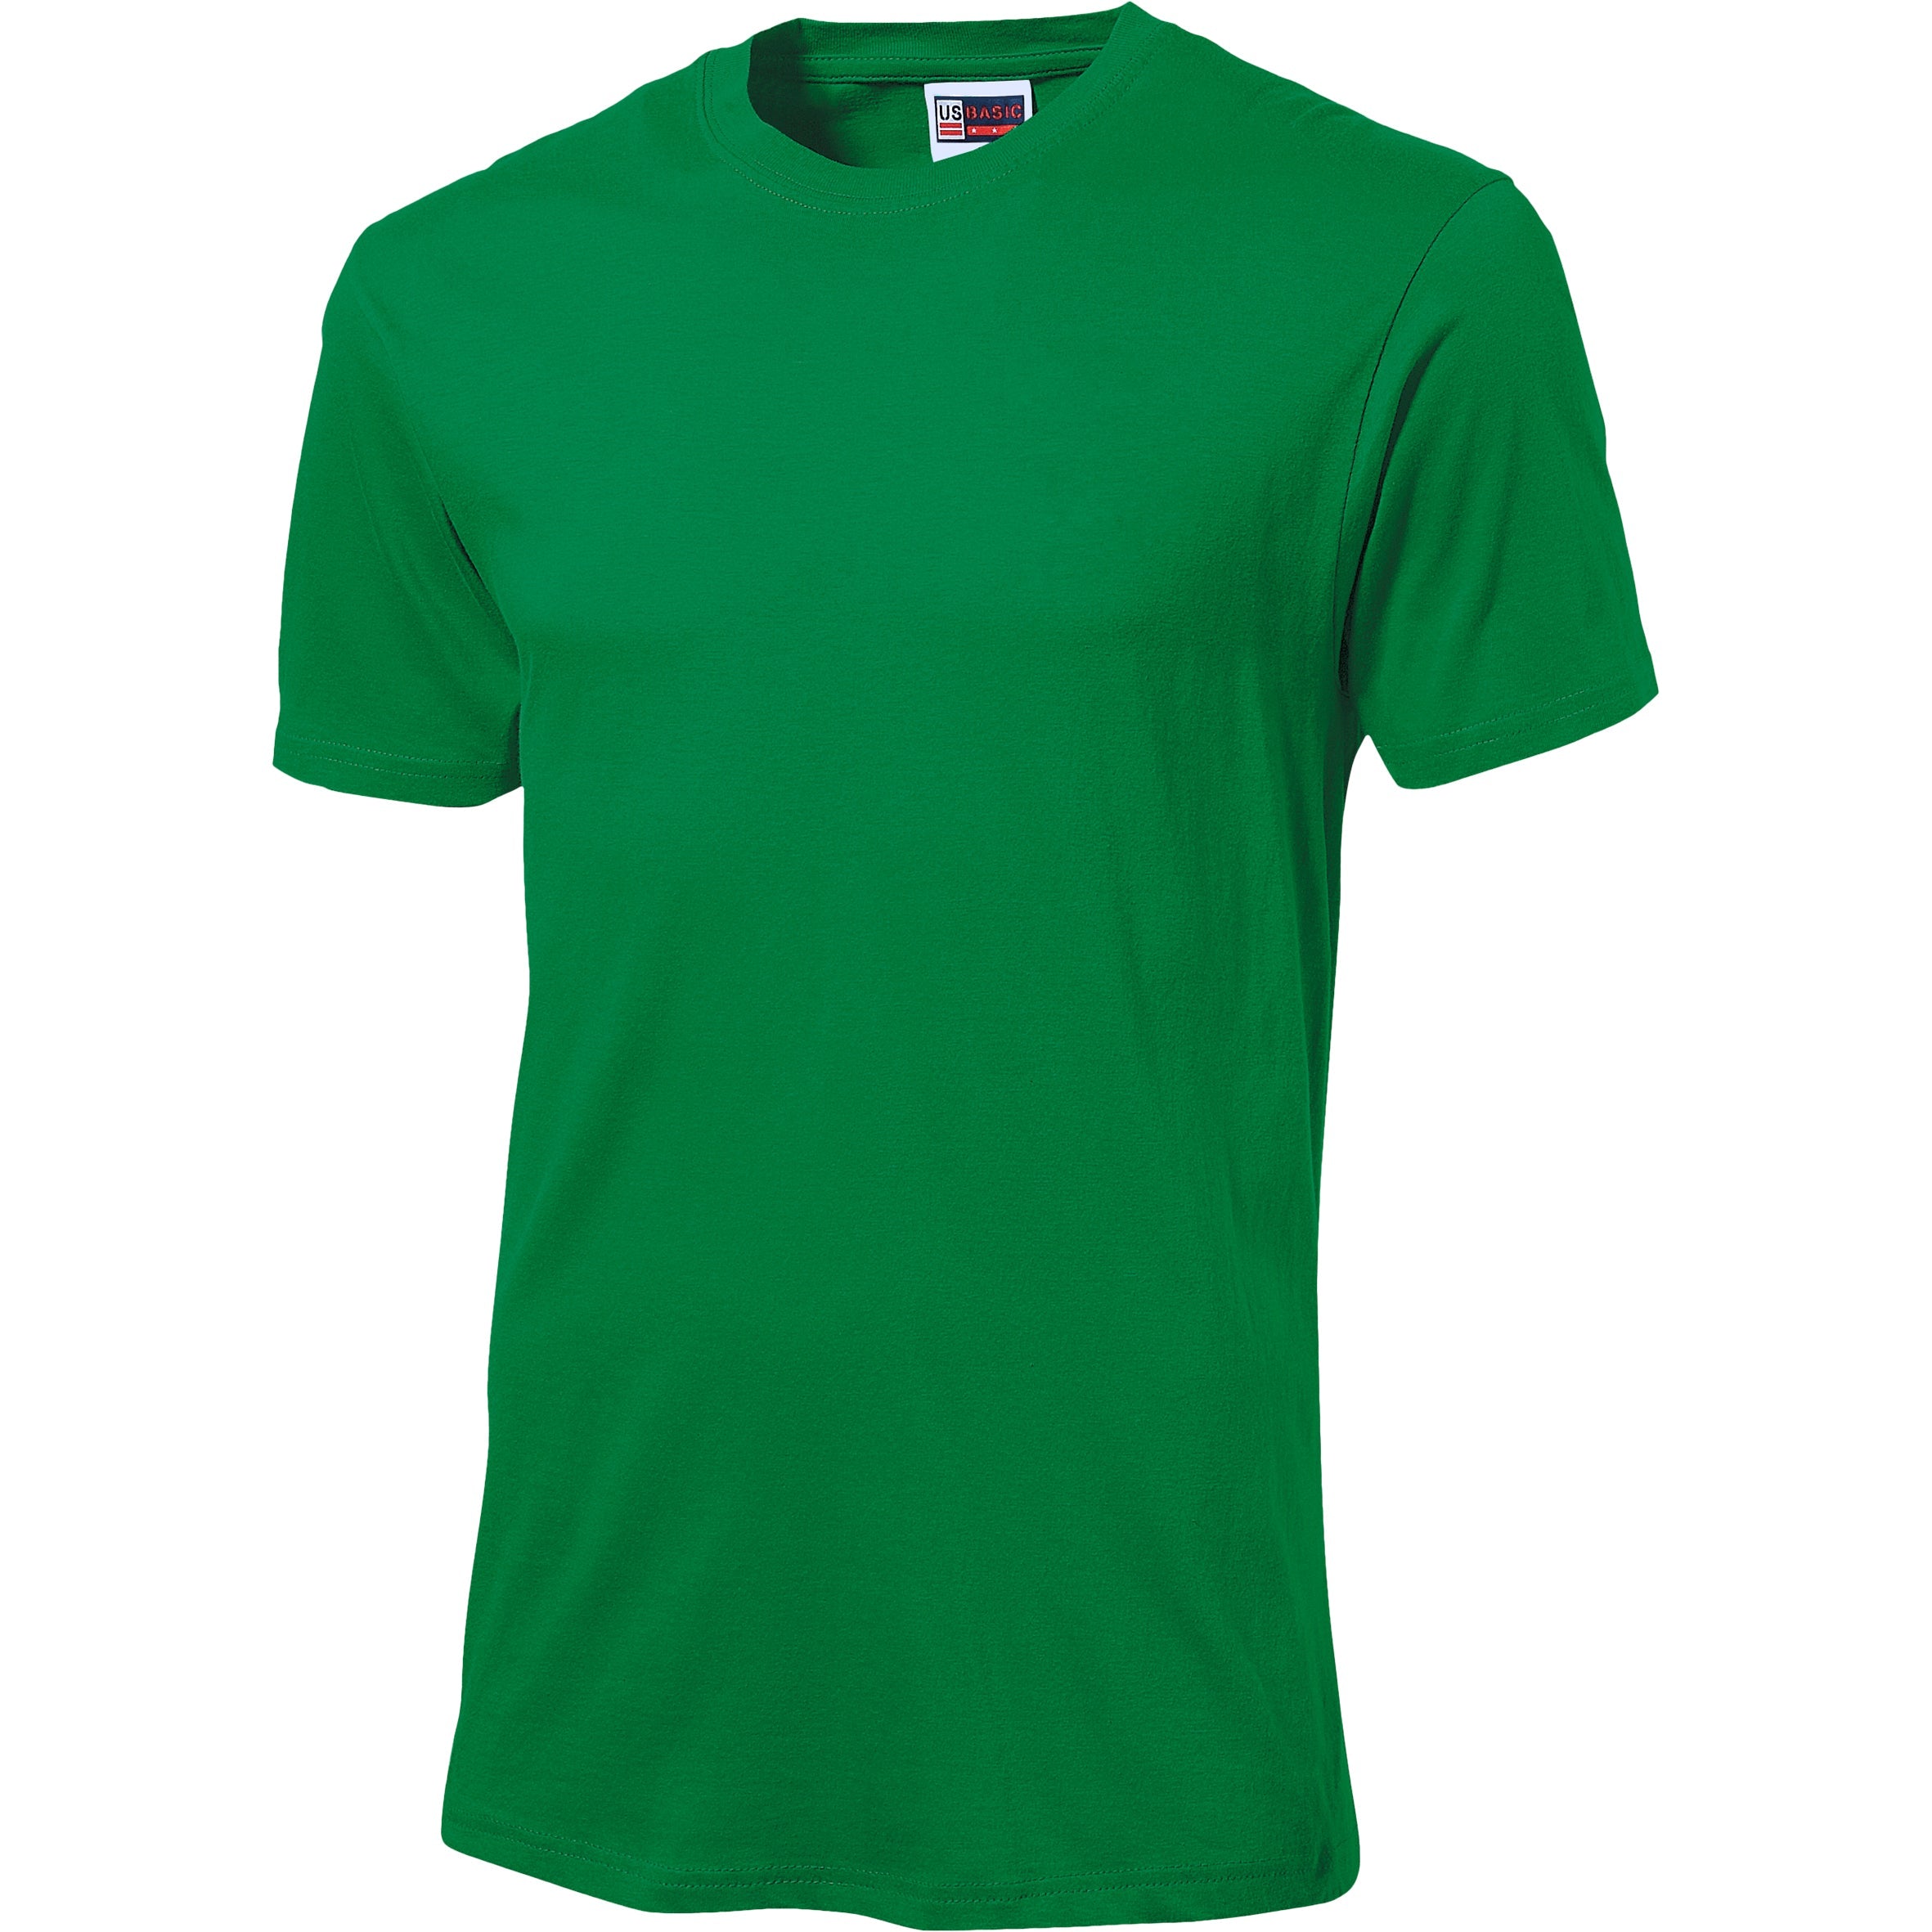 Unisex Super Club 135 T-Shirt L / Bright Green / BG2